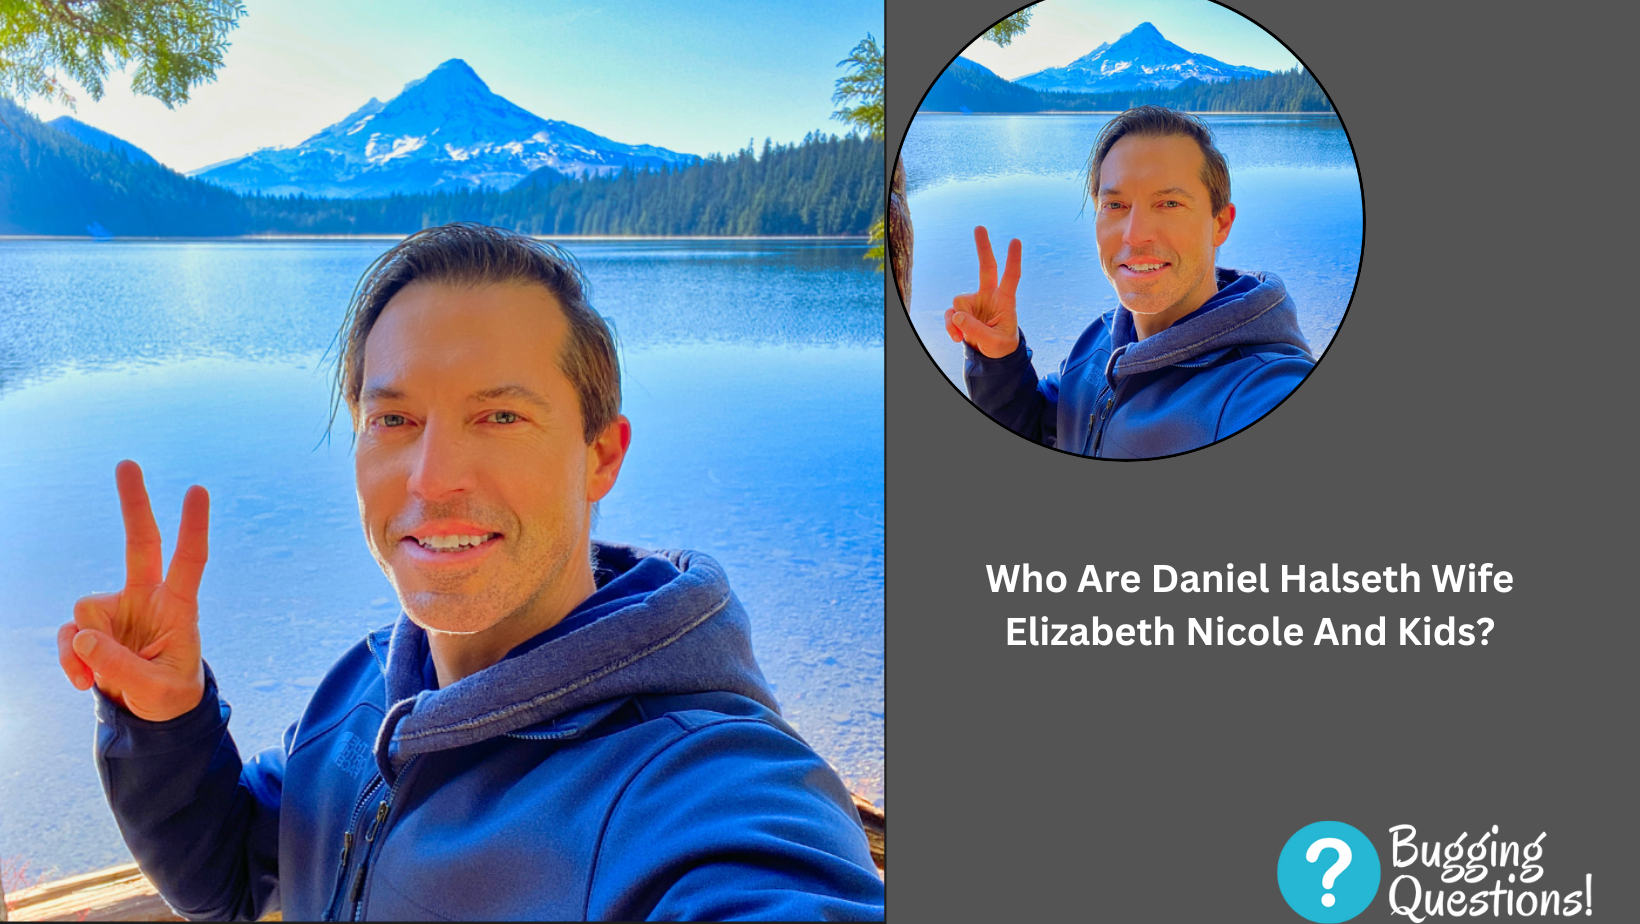 Who Are Daniel Halseth Wife Elizabeth Nicole And Kids?